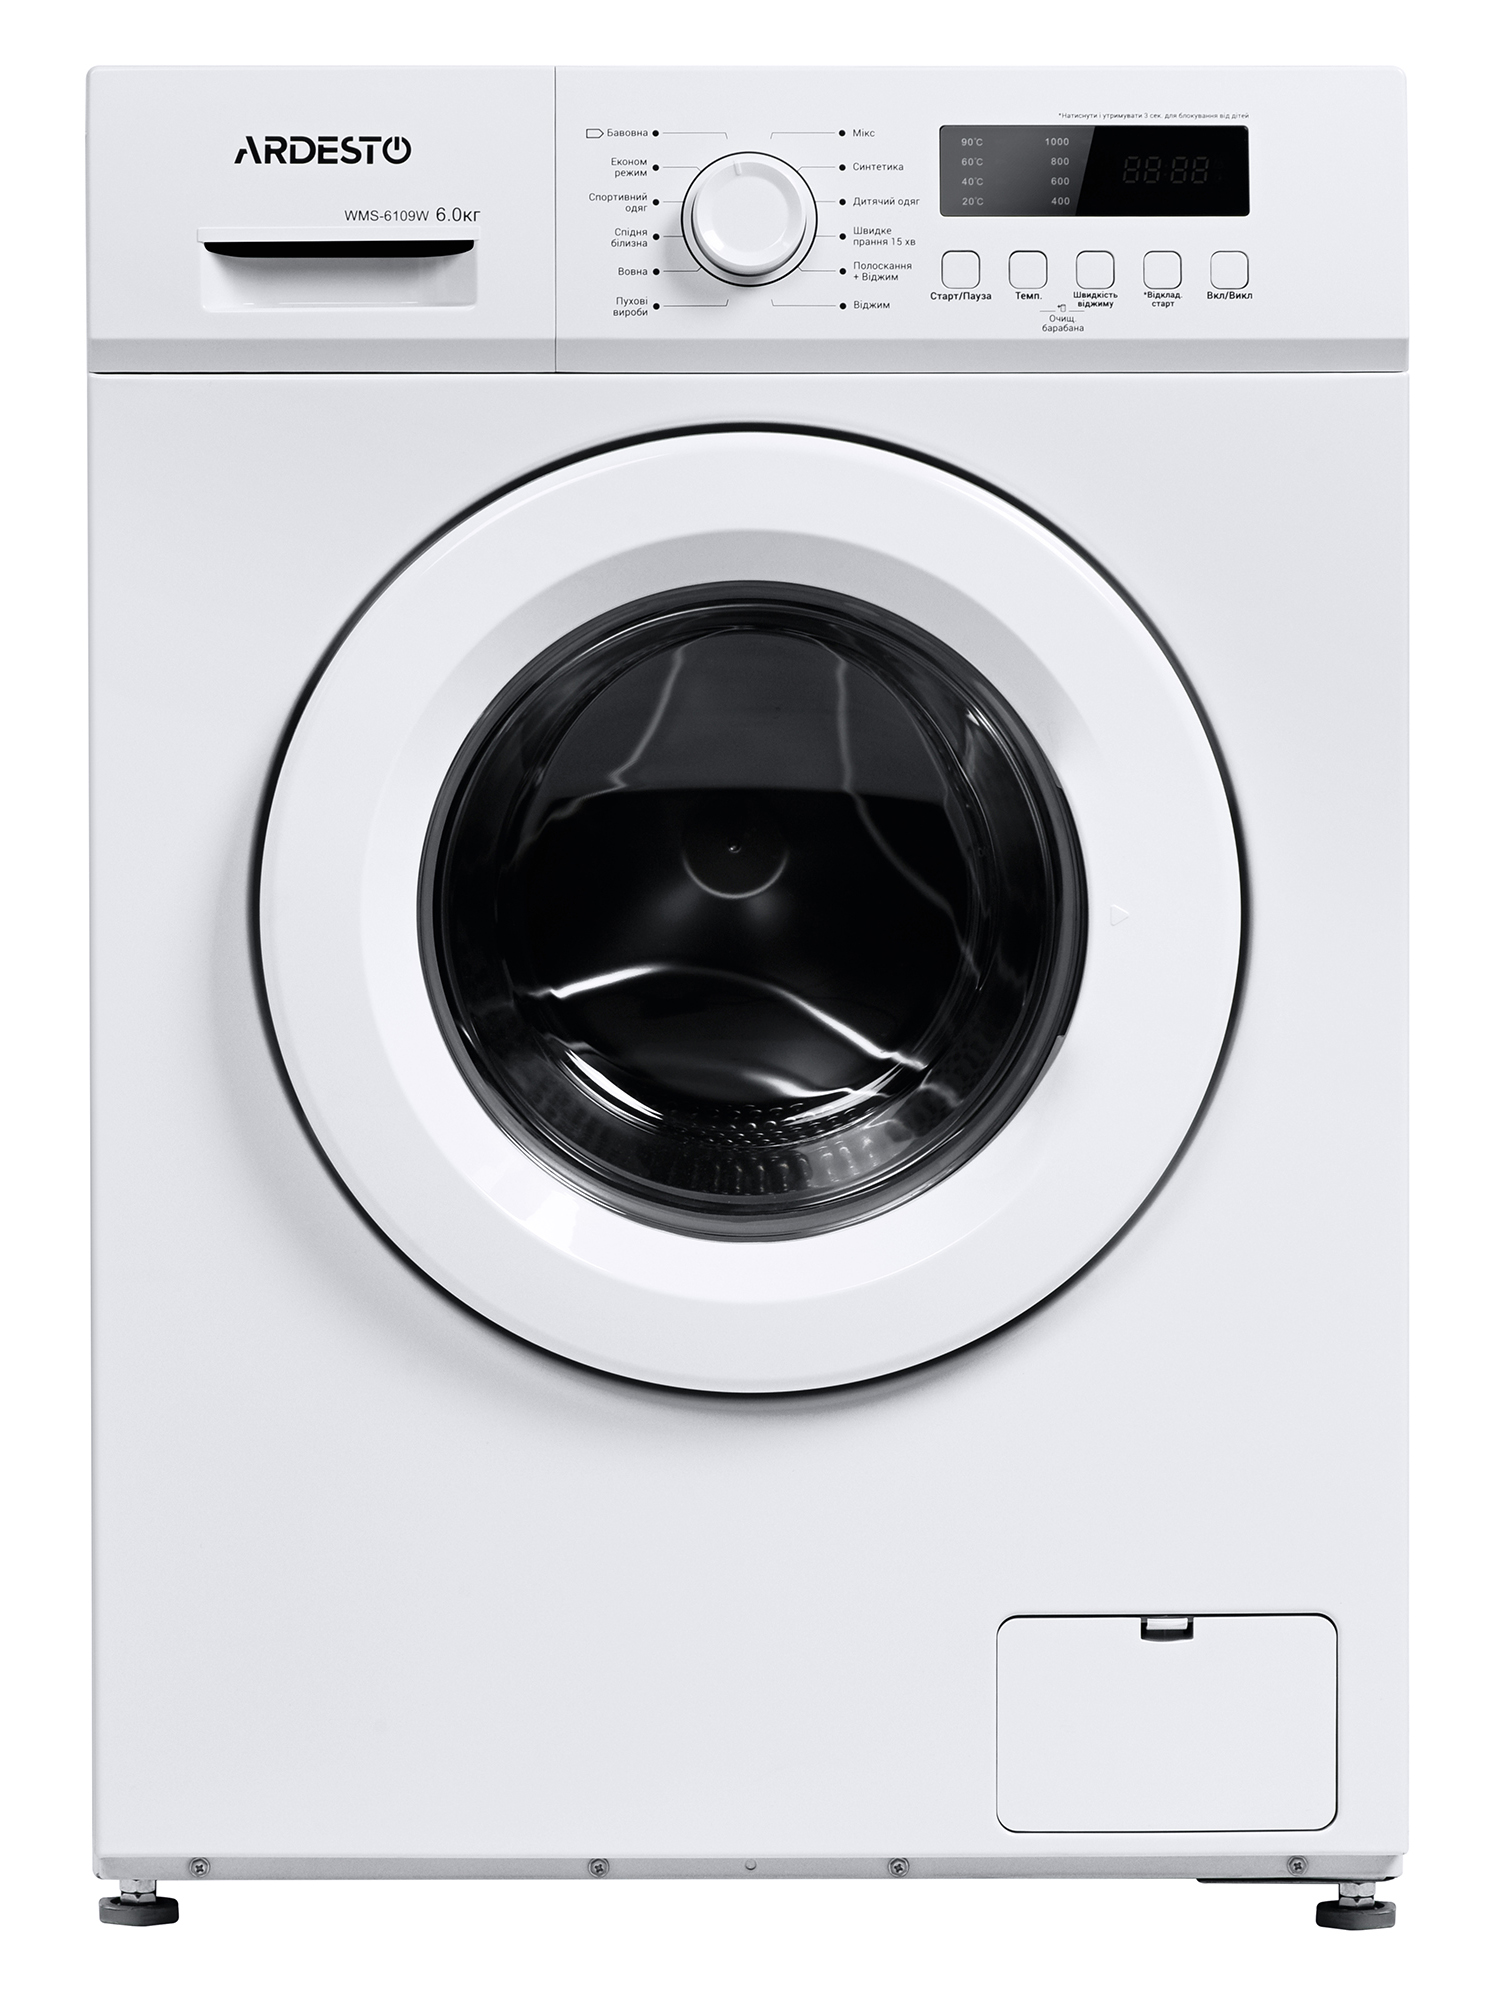 Стандартная стиральная машина Ardesto WMS-6109W